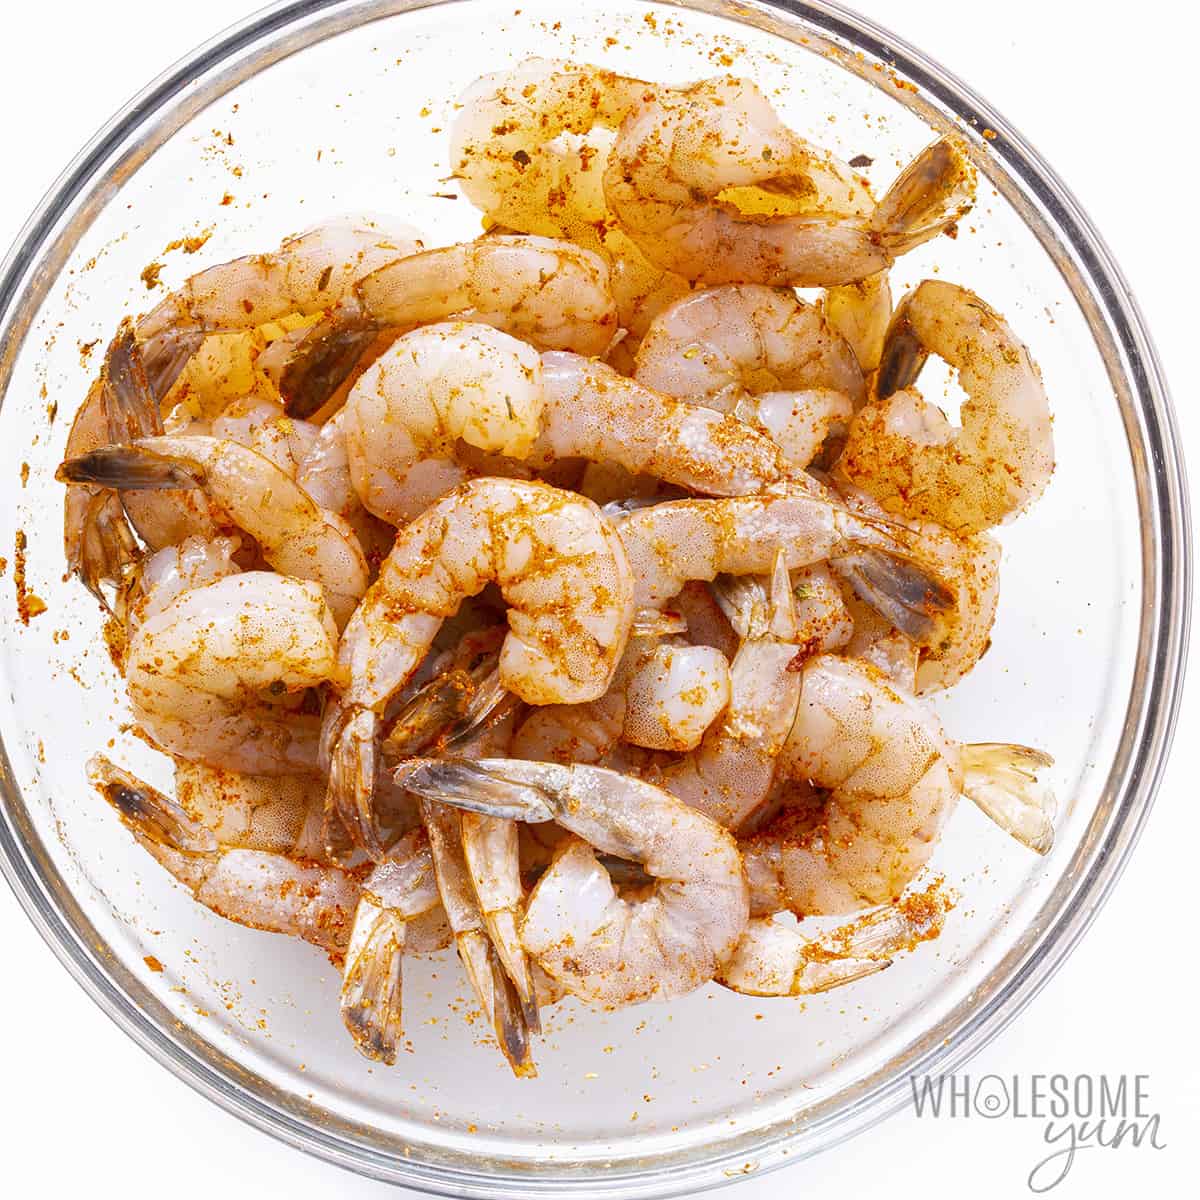 Seasoned raw shrimp in a glass bowl